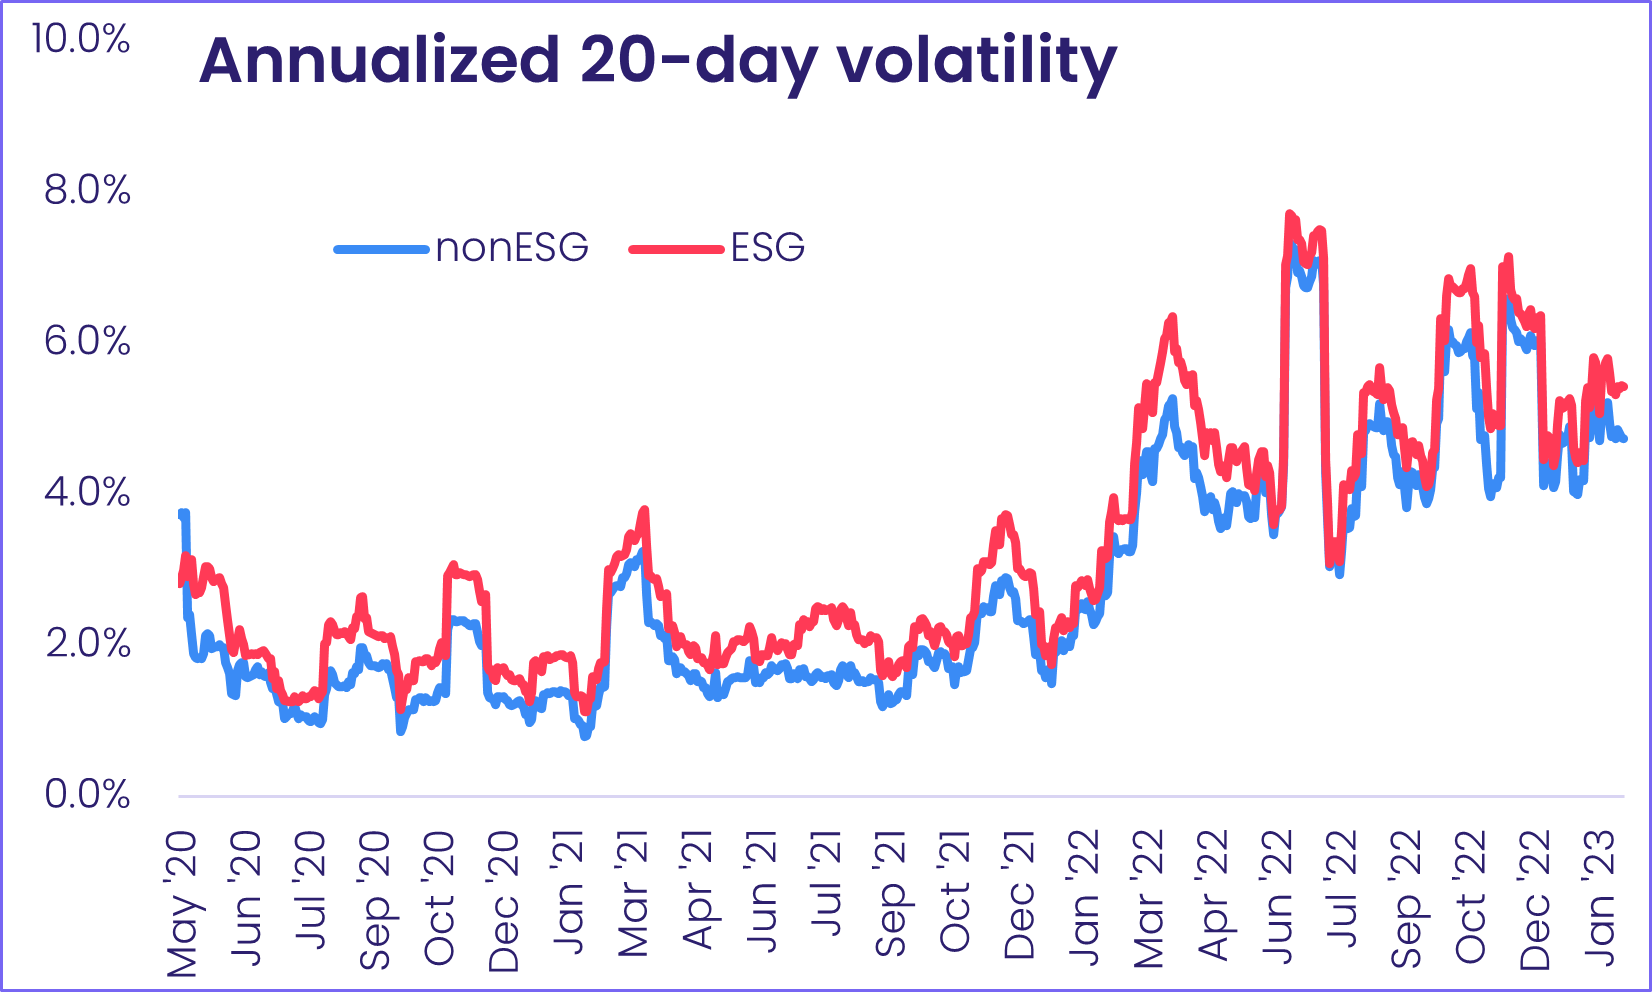 Chart representing 'Annual 20 day volatility'